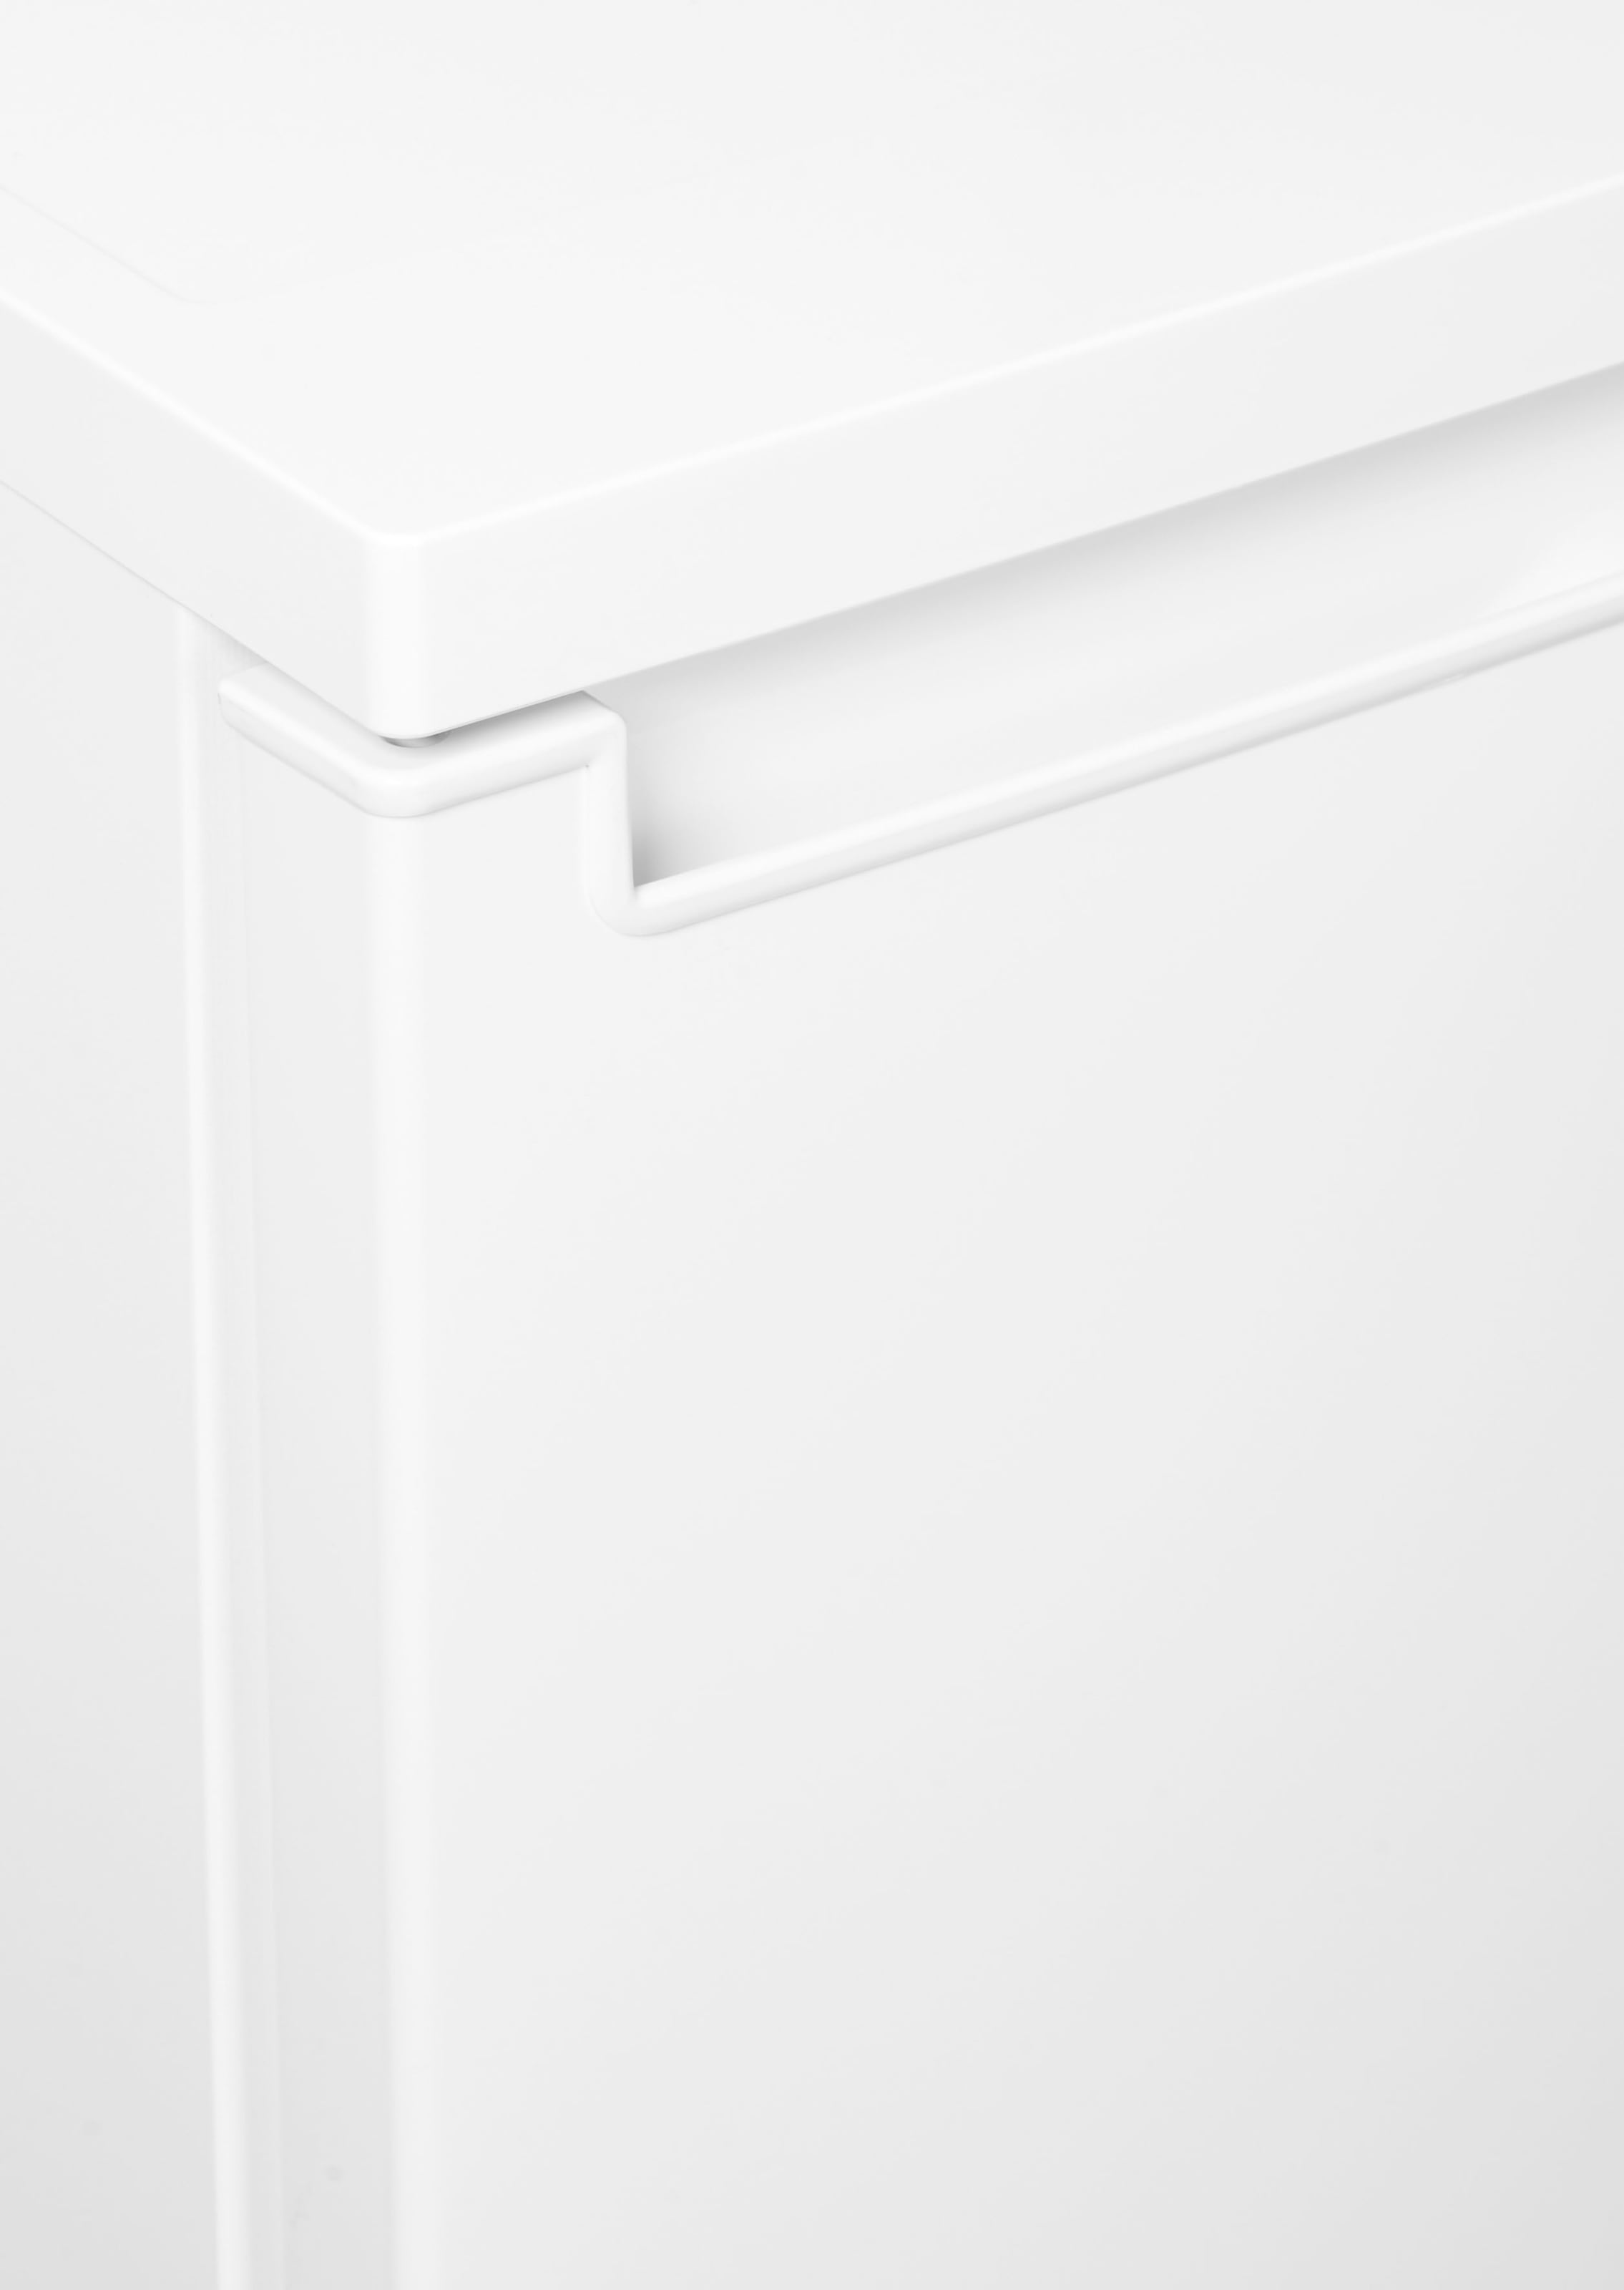 BOSCH Table Top Kühlschrank »KTR15NWEA«, KTR15NWEA, 85 cm hoch, 56 cm breit